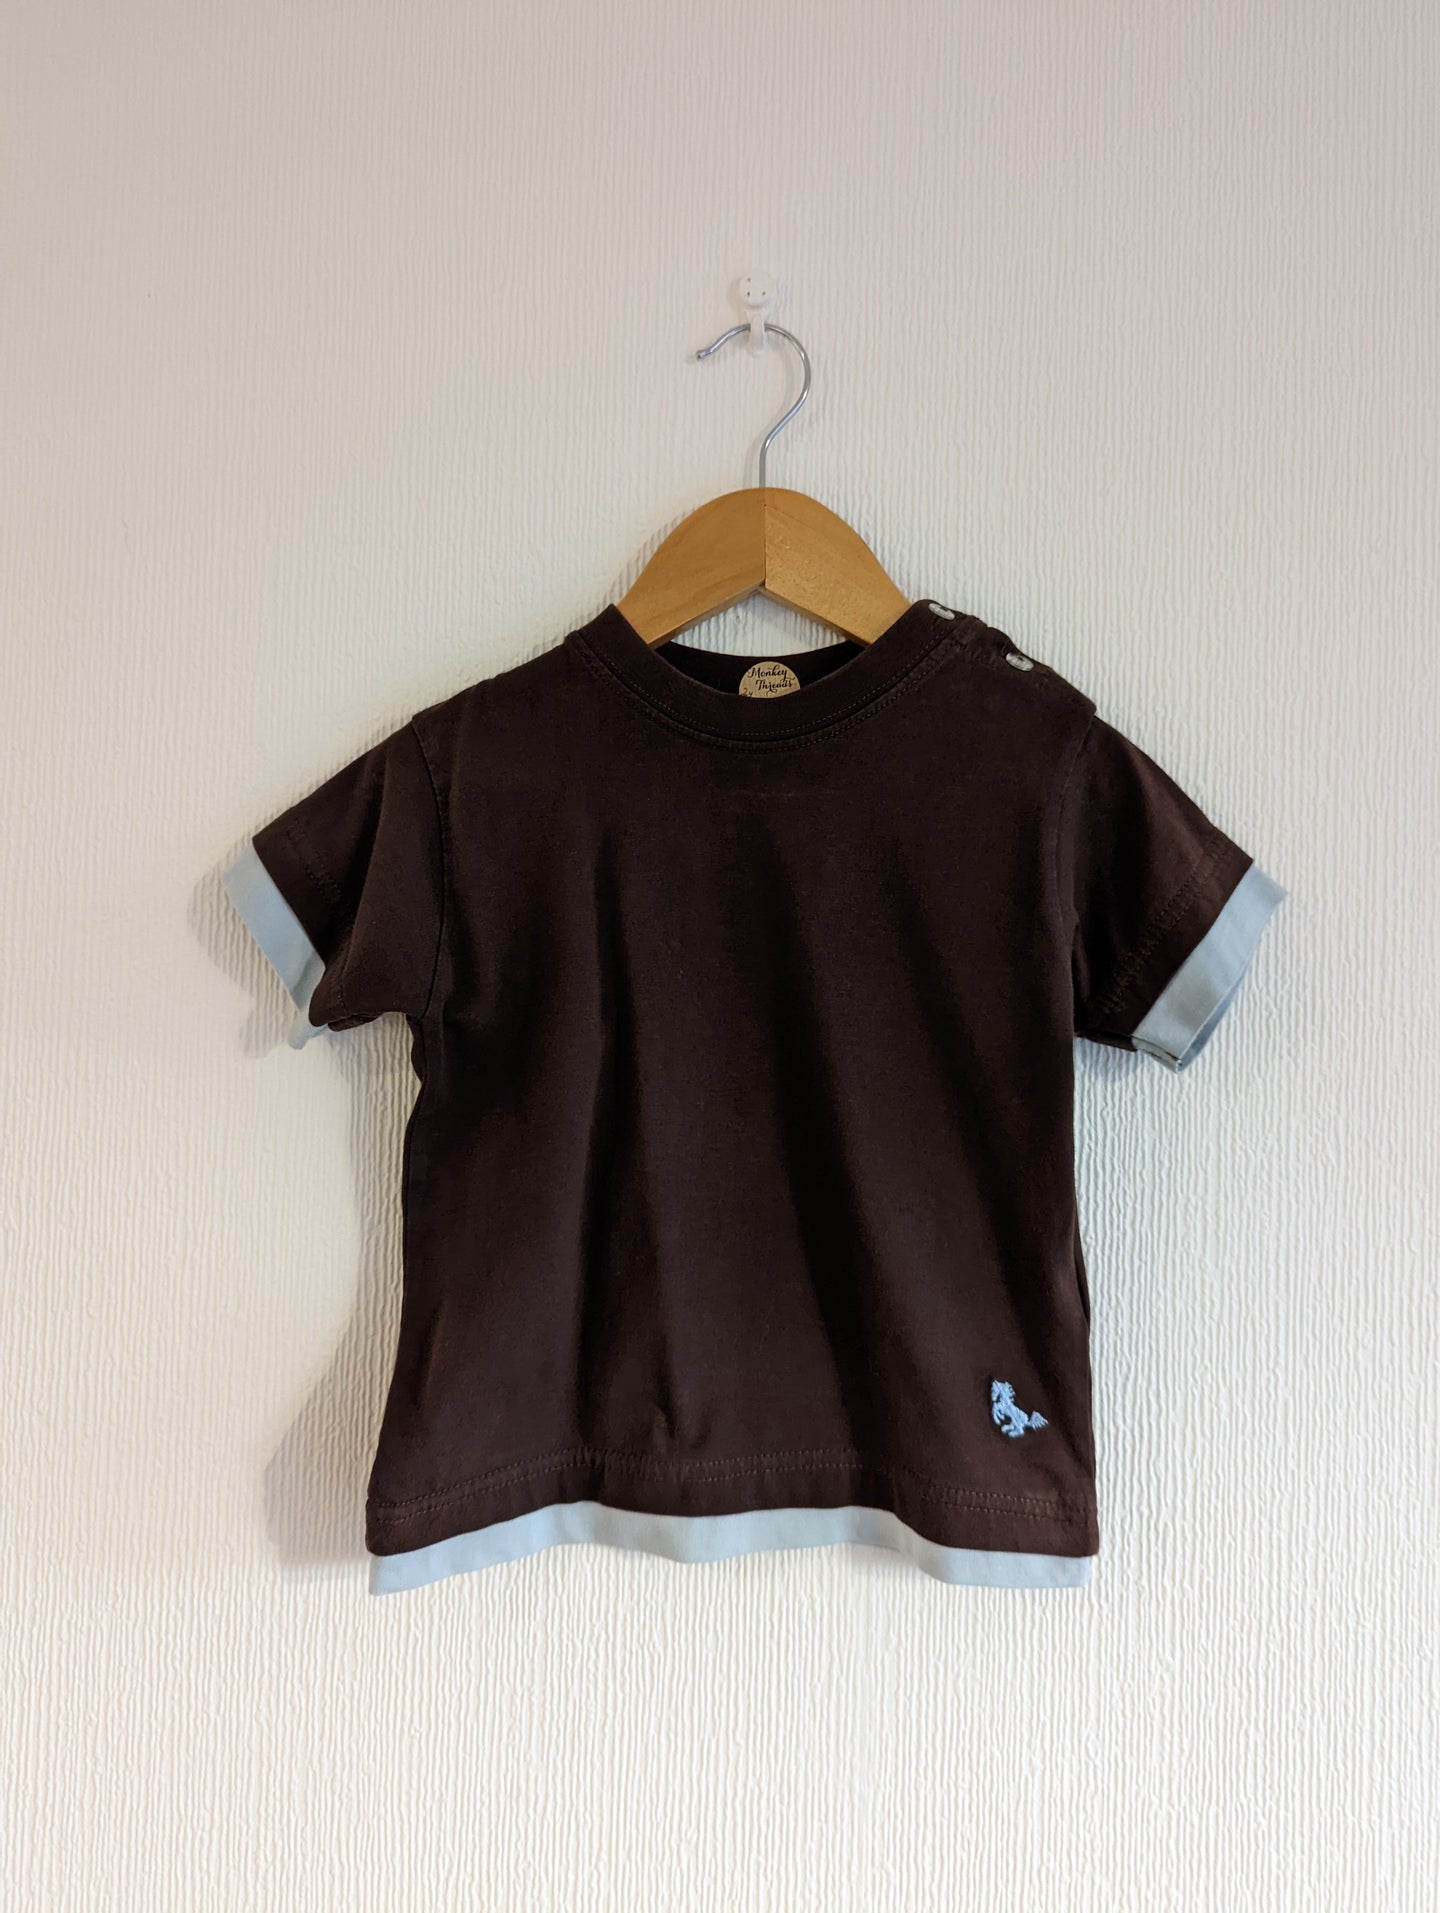 Chocolate Brown & Sky Blue T Shirt - 2 Years